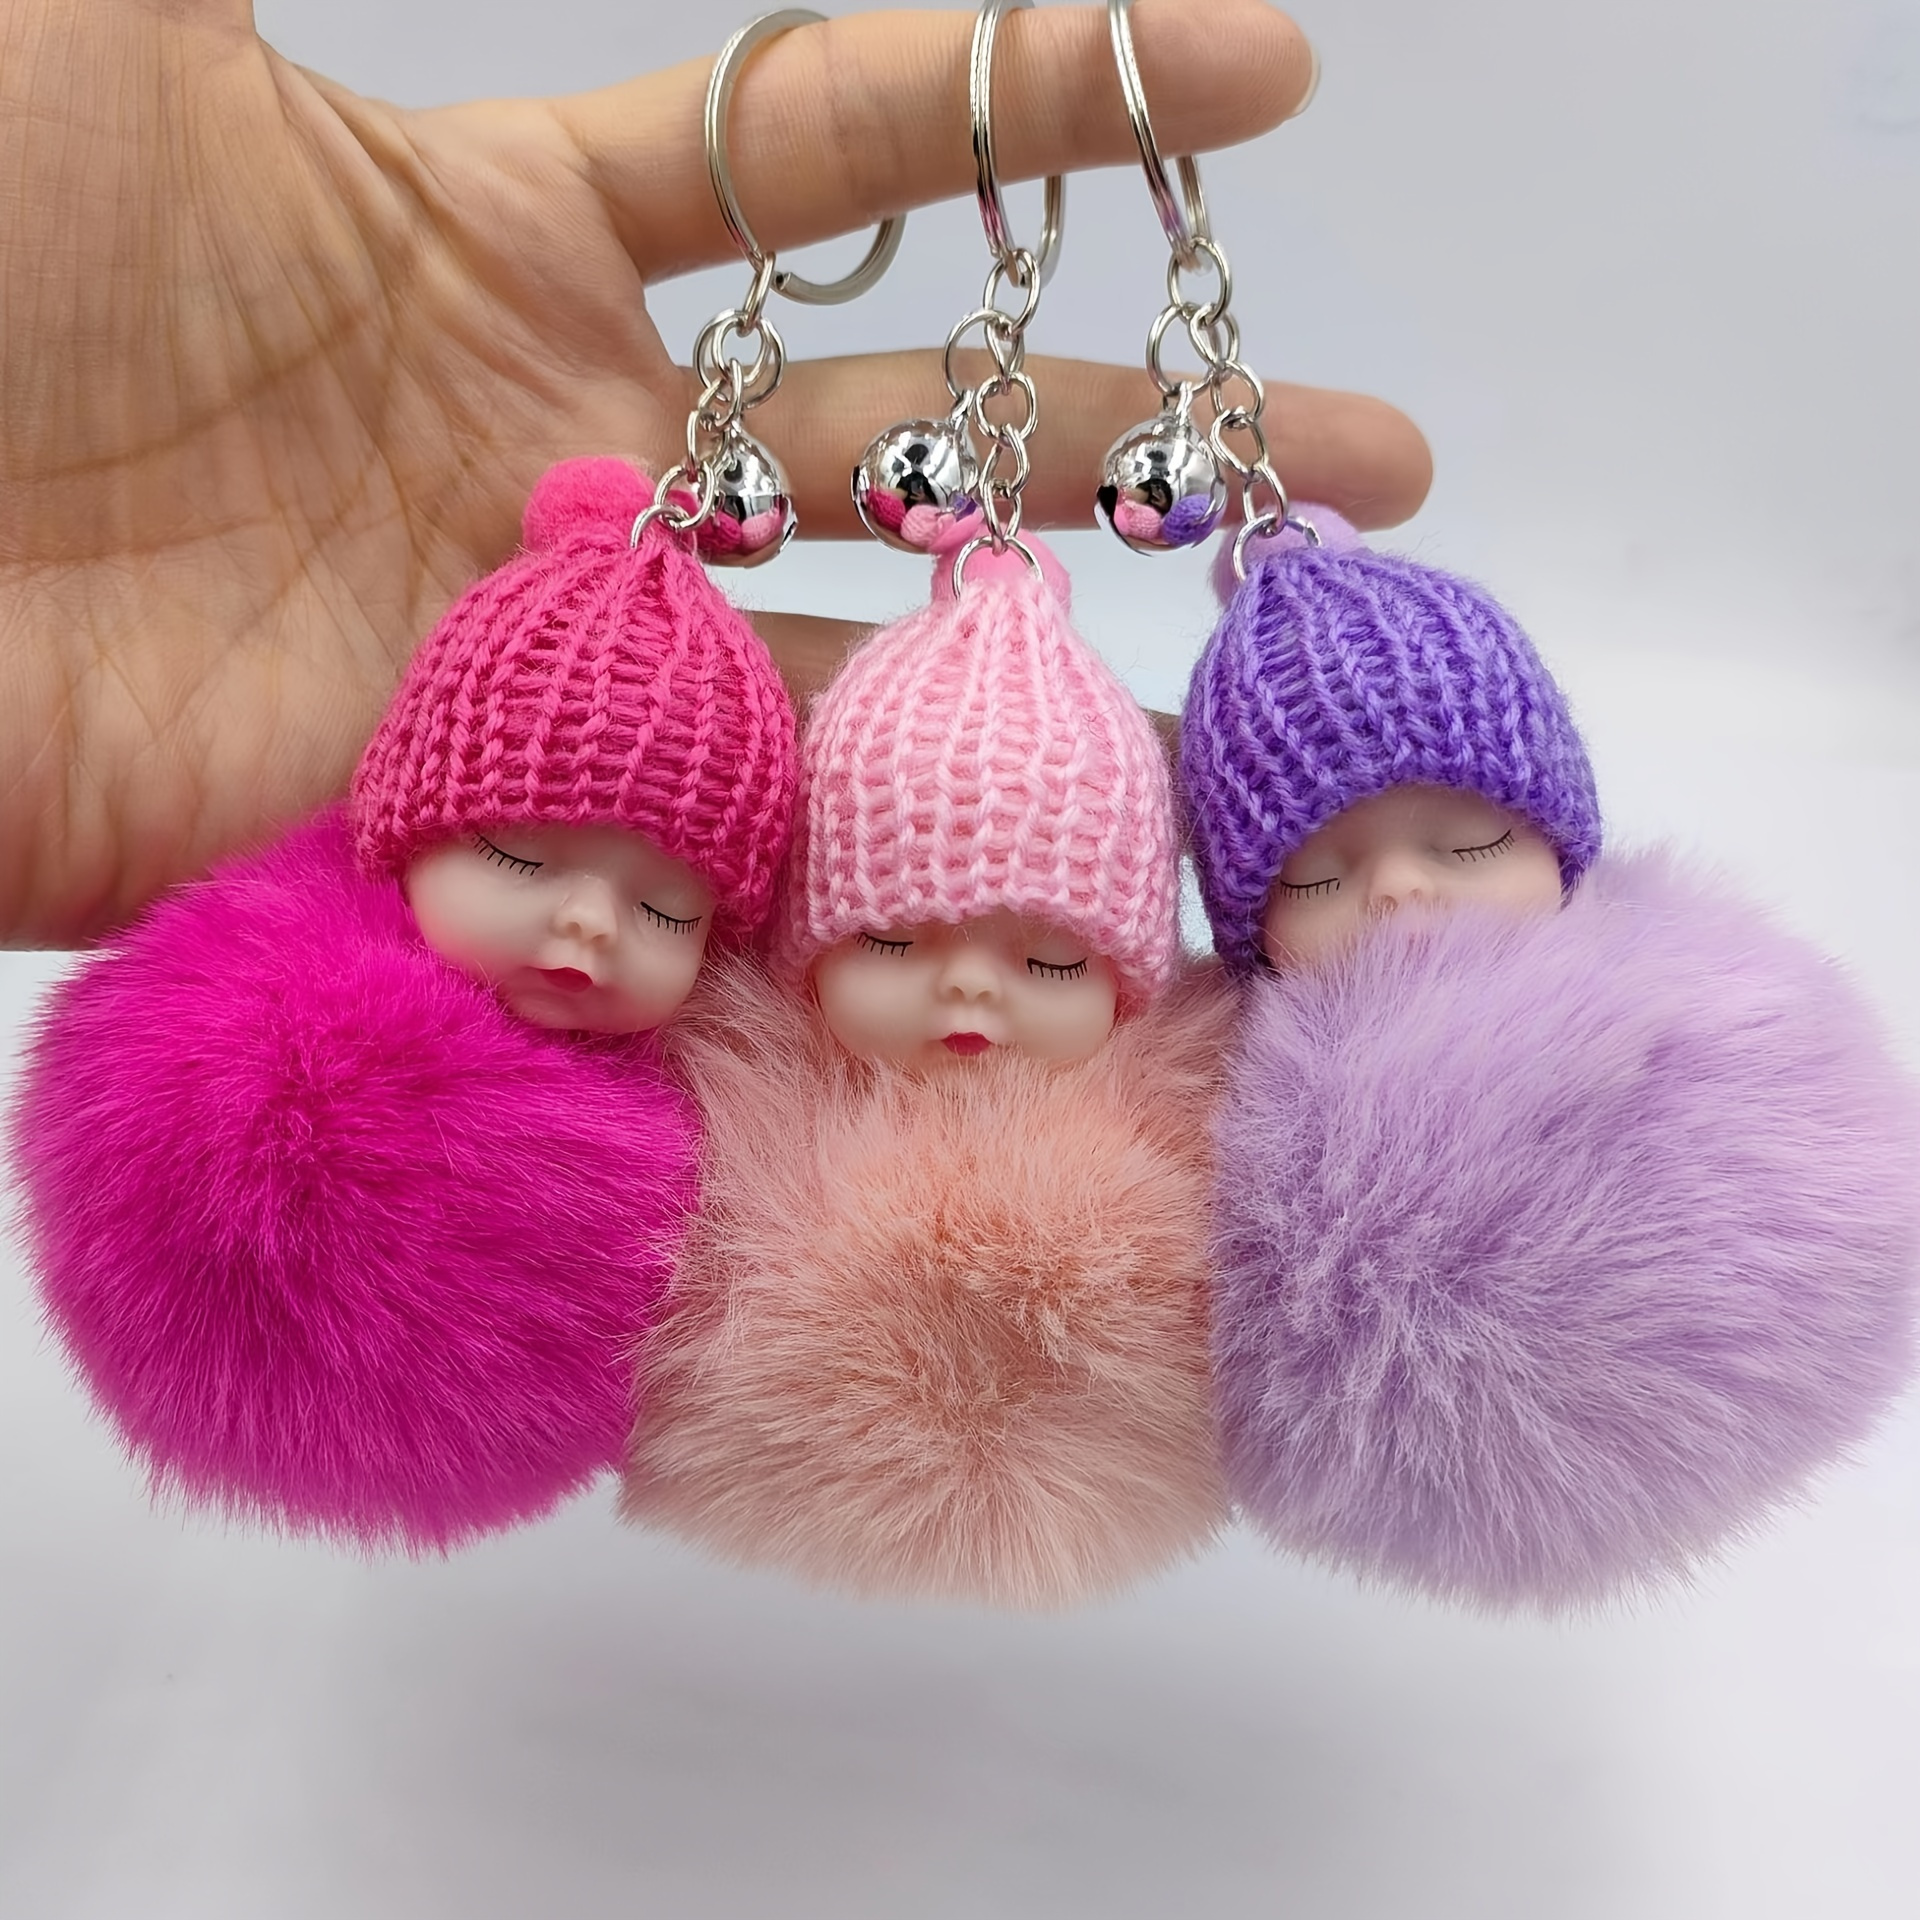 Heiheiup Pendant Baby Chains Bags PomPom Keyrings Cute Doll Key Charm  Sleeping Keychains Purse Key Hook 